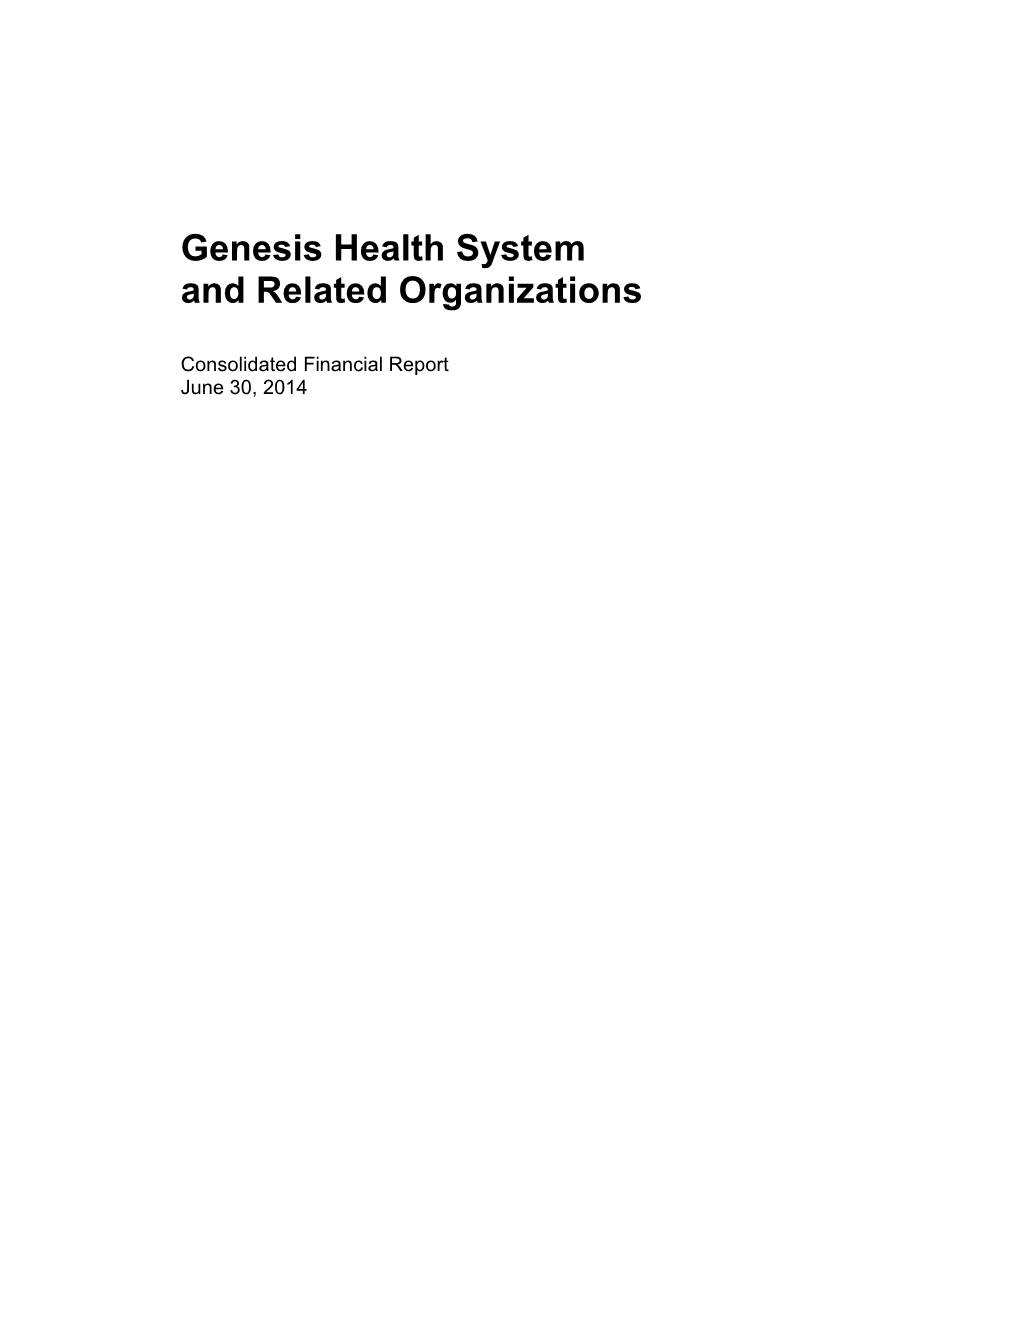 Genesis Health System 2014 Audit Report